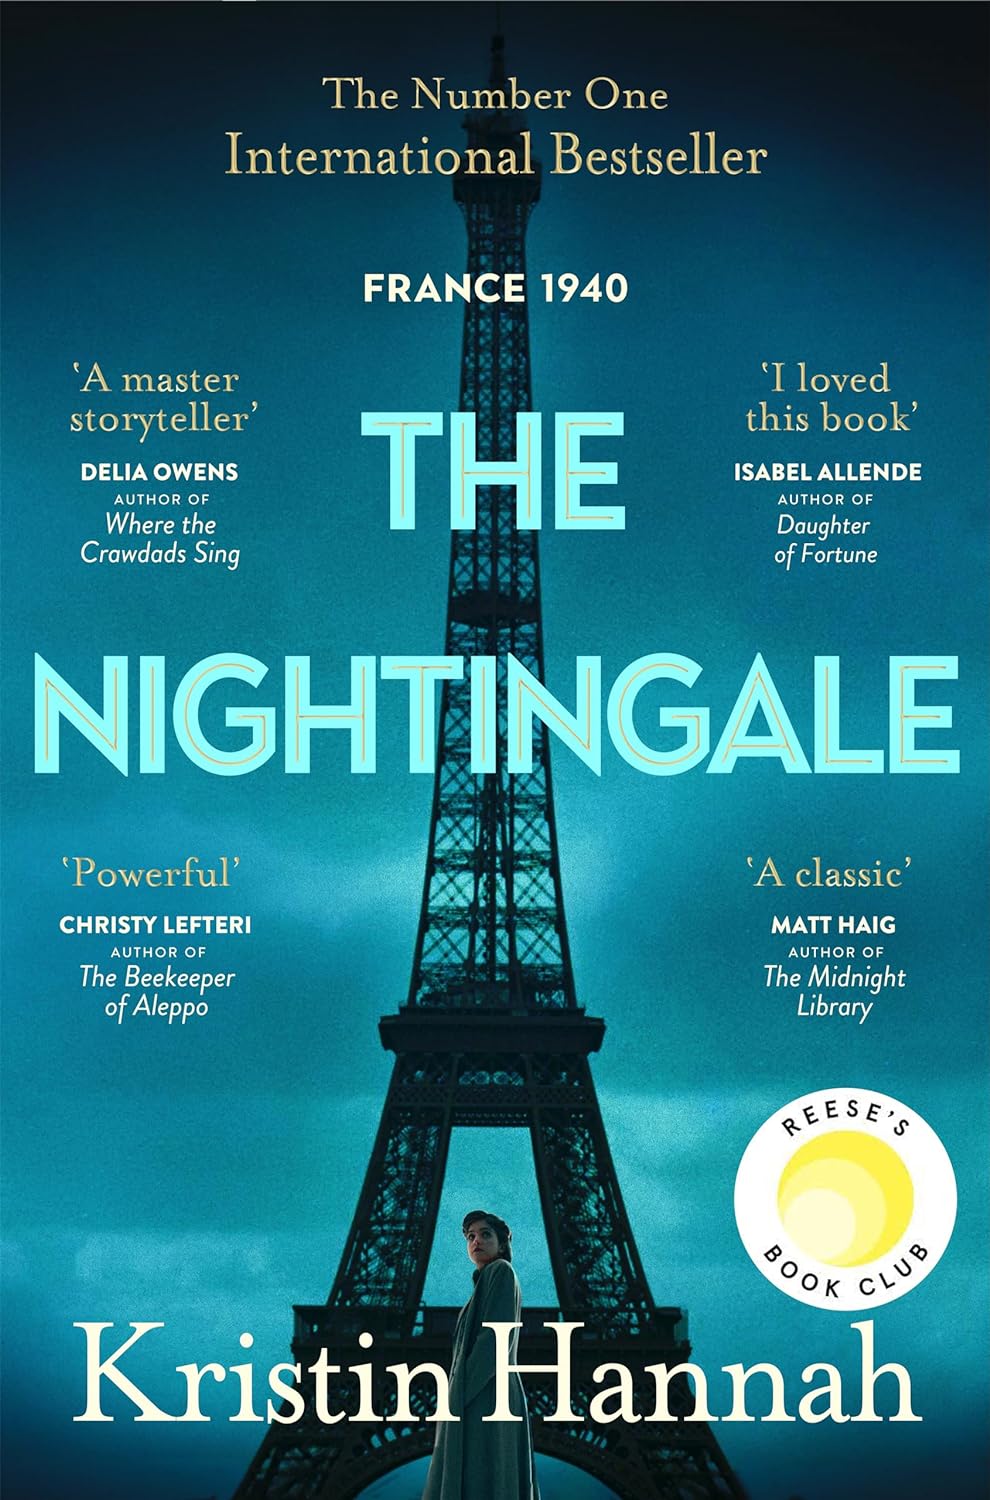 The Nightingale by Kristin Hannah (Author)